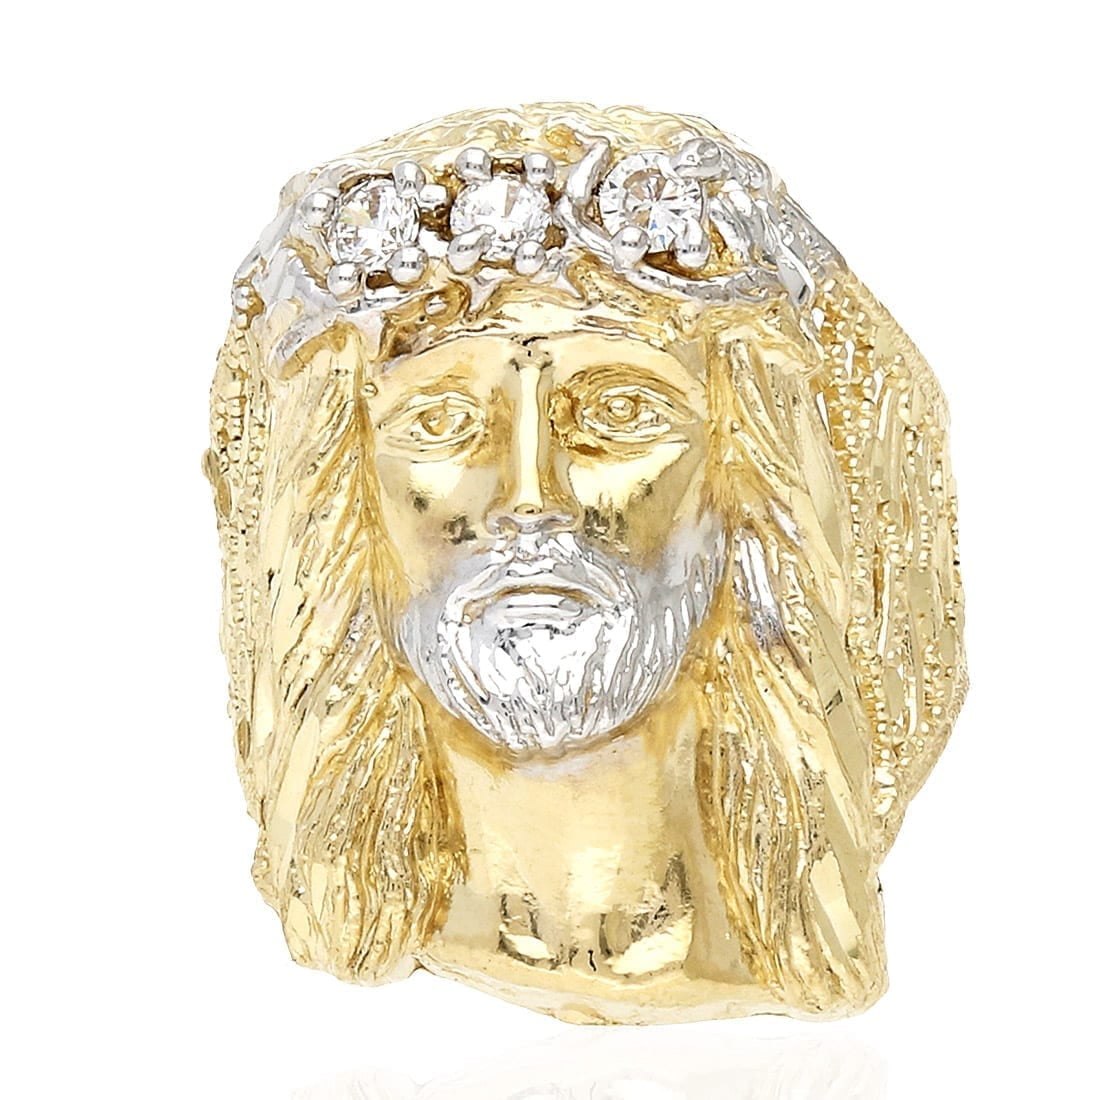 10K Yellow Gold CZ Adorned Jesus Face Head Ring - Size 11 | eBay